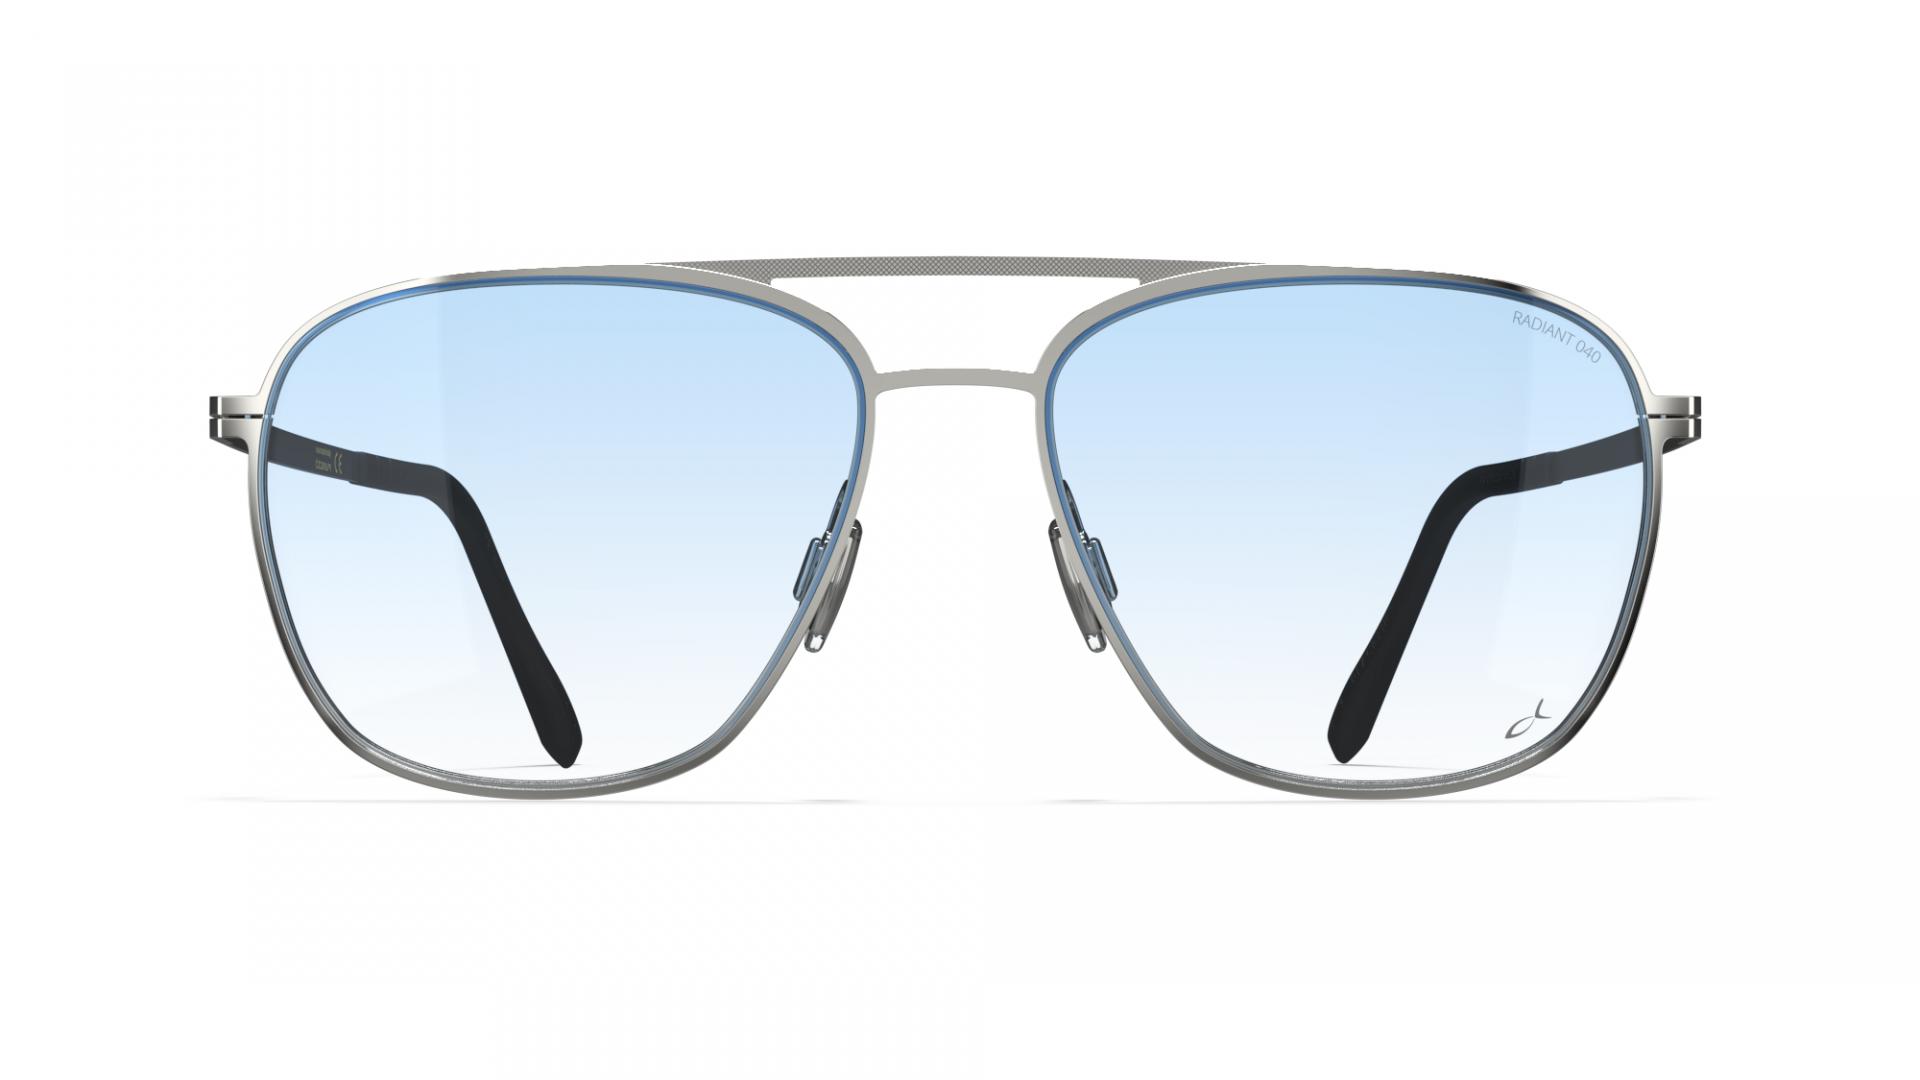 Sunglasses Shiny silver | Blackfin Squared Zabriskie ii Aviator Vintage